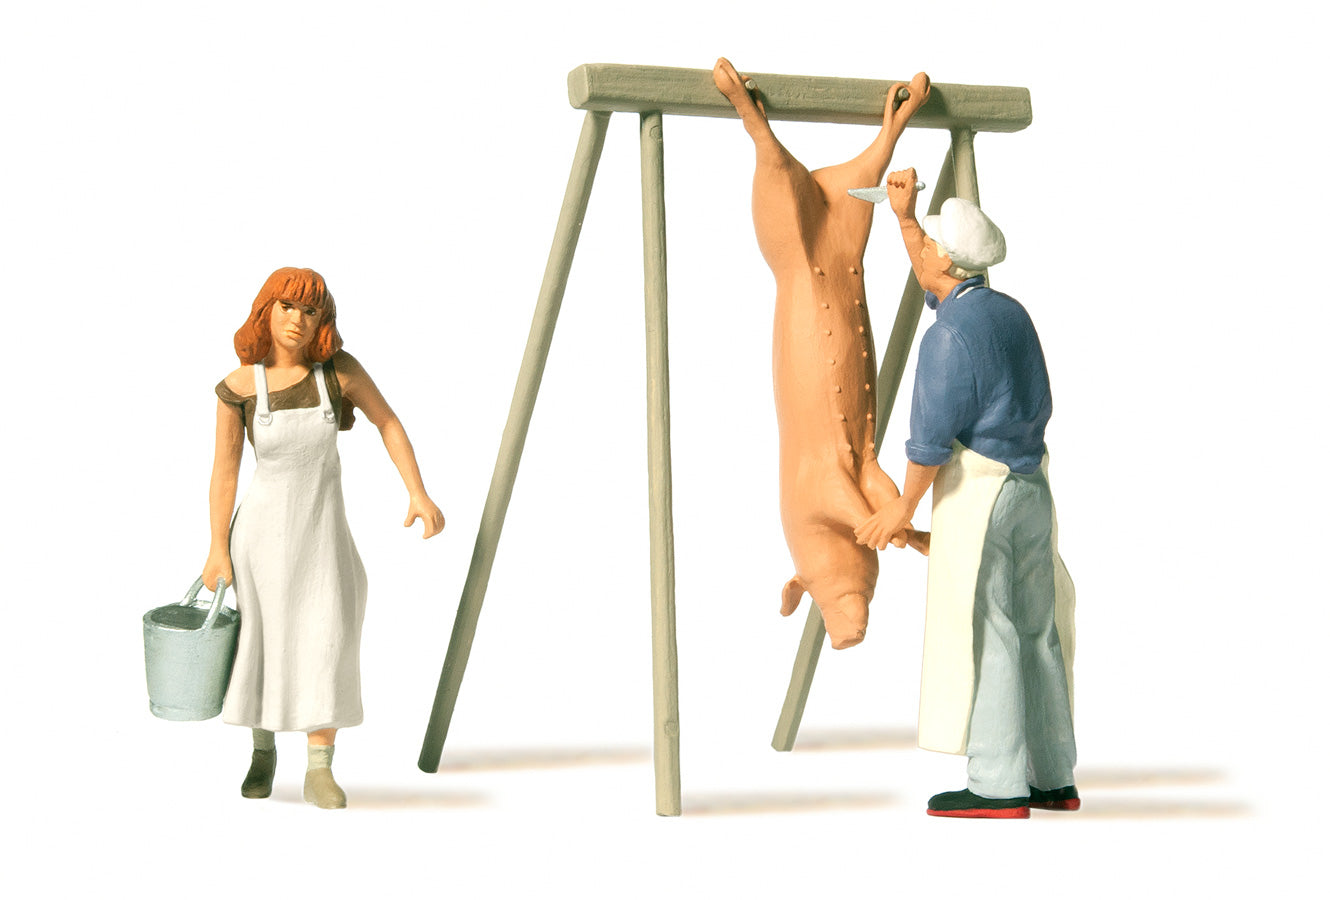 Preiser 44935 G Farm Workers Slaughtering a Pig Figures (Set of 3)